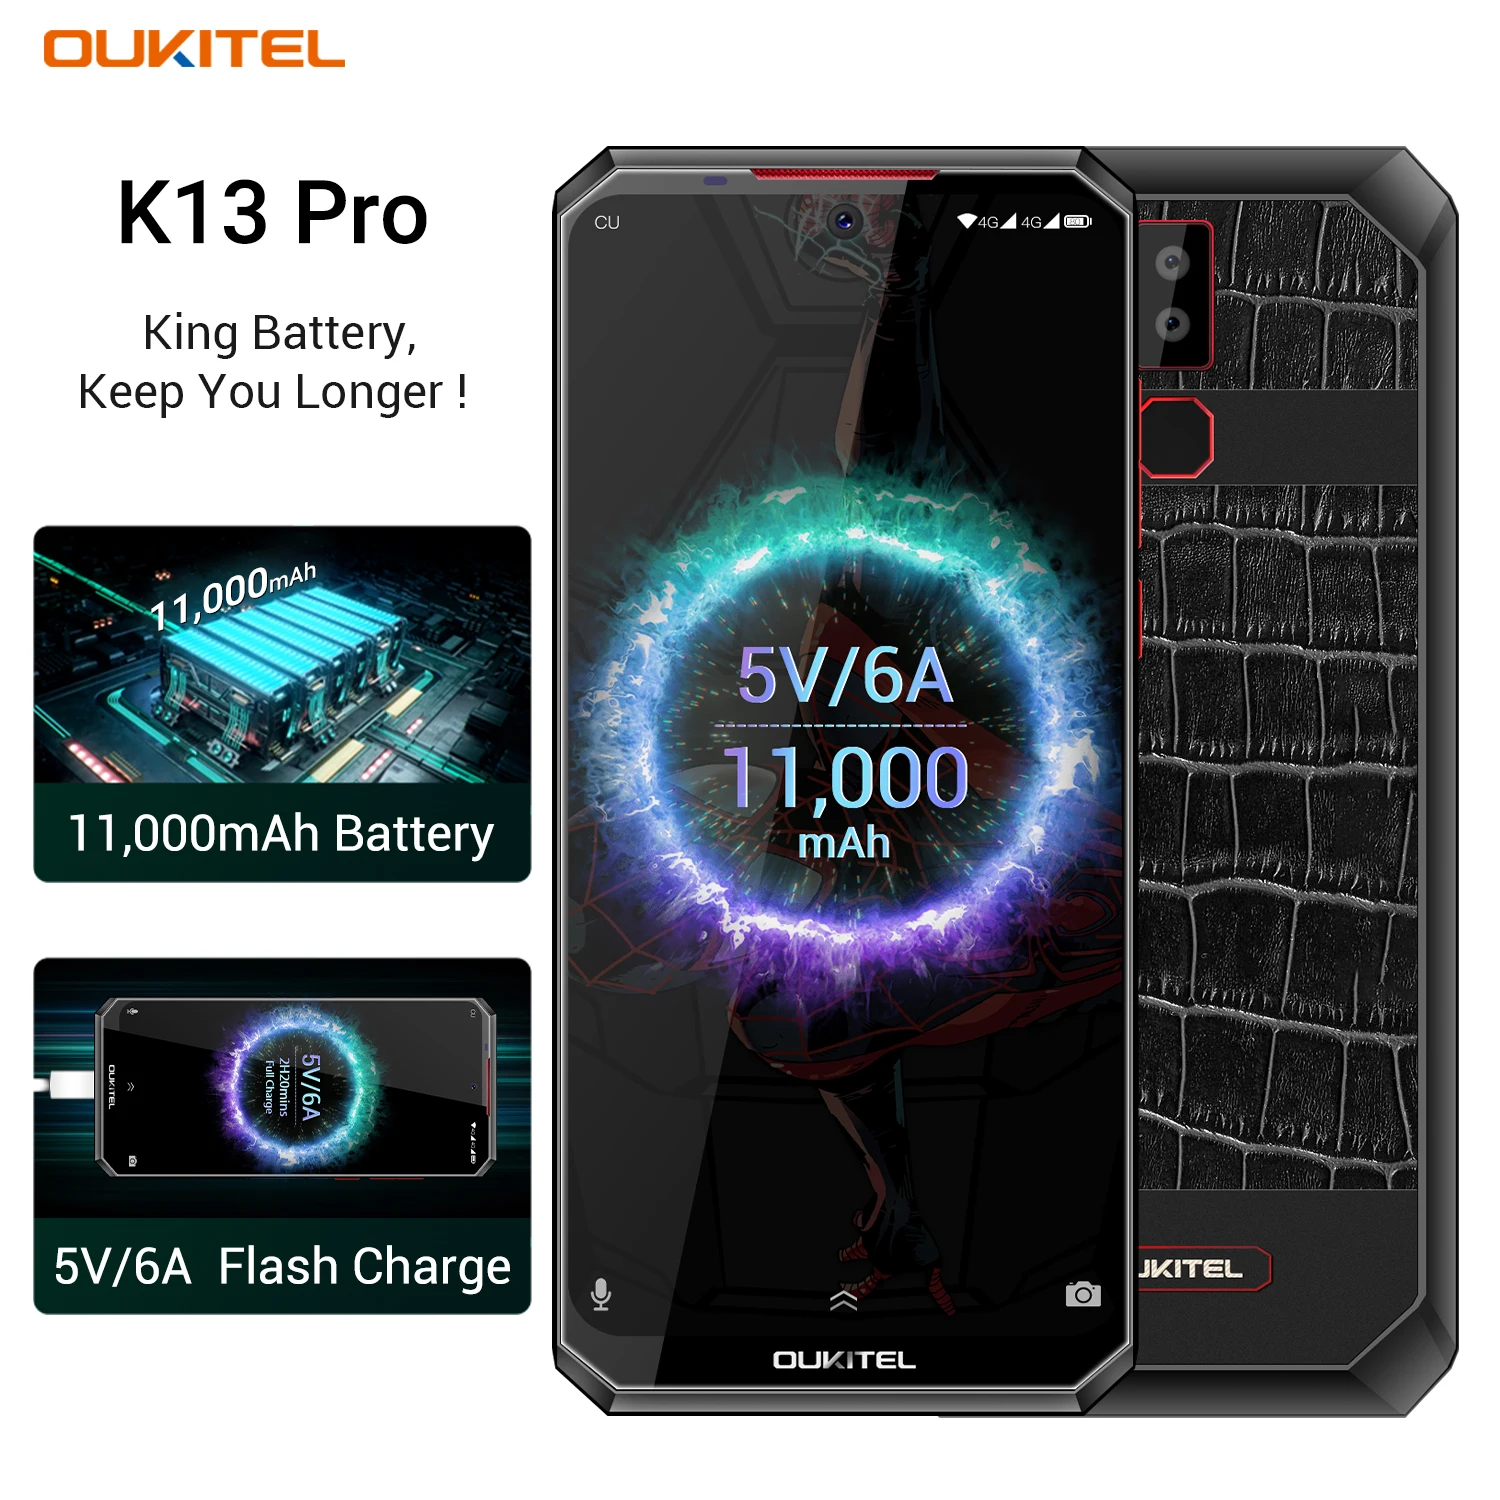 OUKITEL K13 Pro Android 9,0 мобильный телефон 6,4" 19,5: 9 экран MT6762 4G ram 64G rom 5 V/6A 11000mAh OTA NFC сканер отпечатков пальцев Смартфон